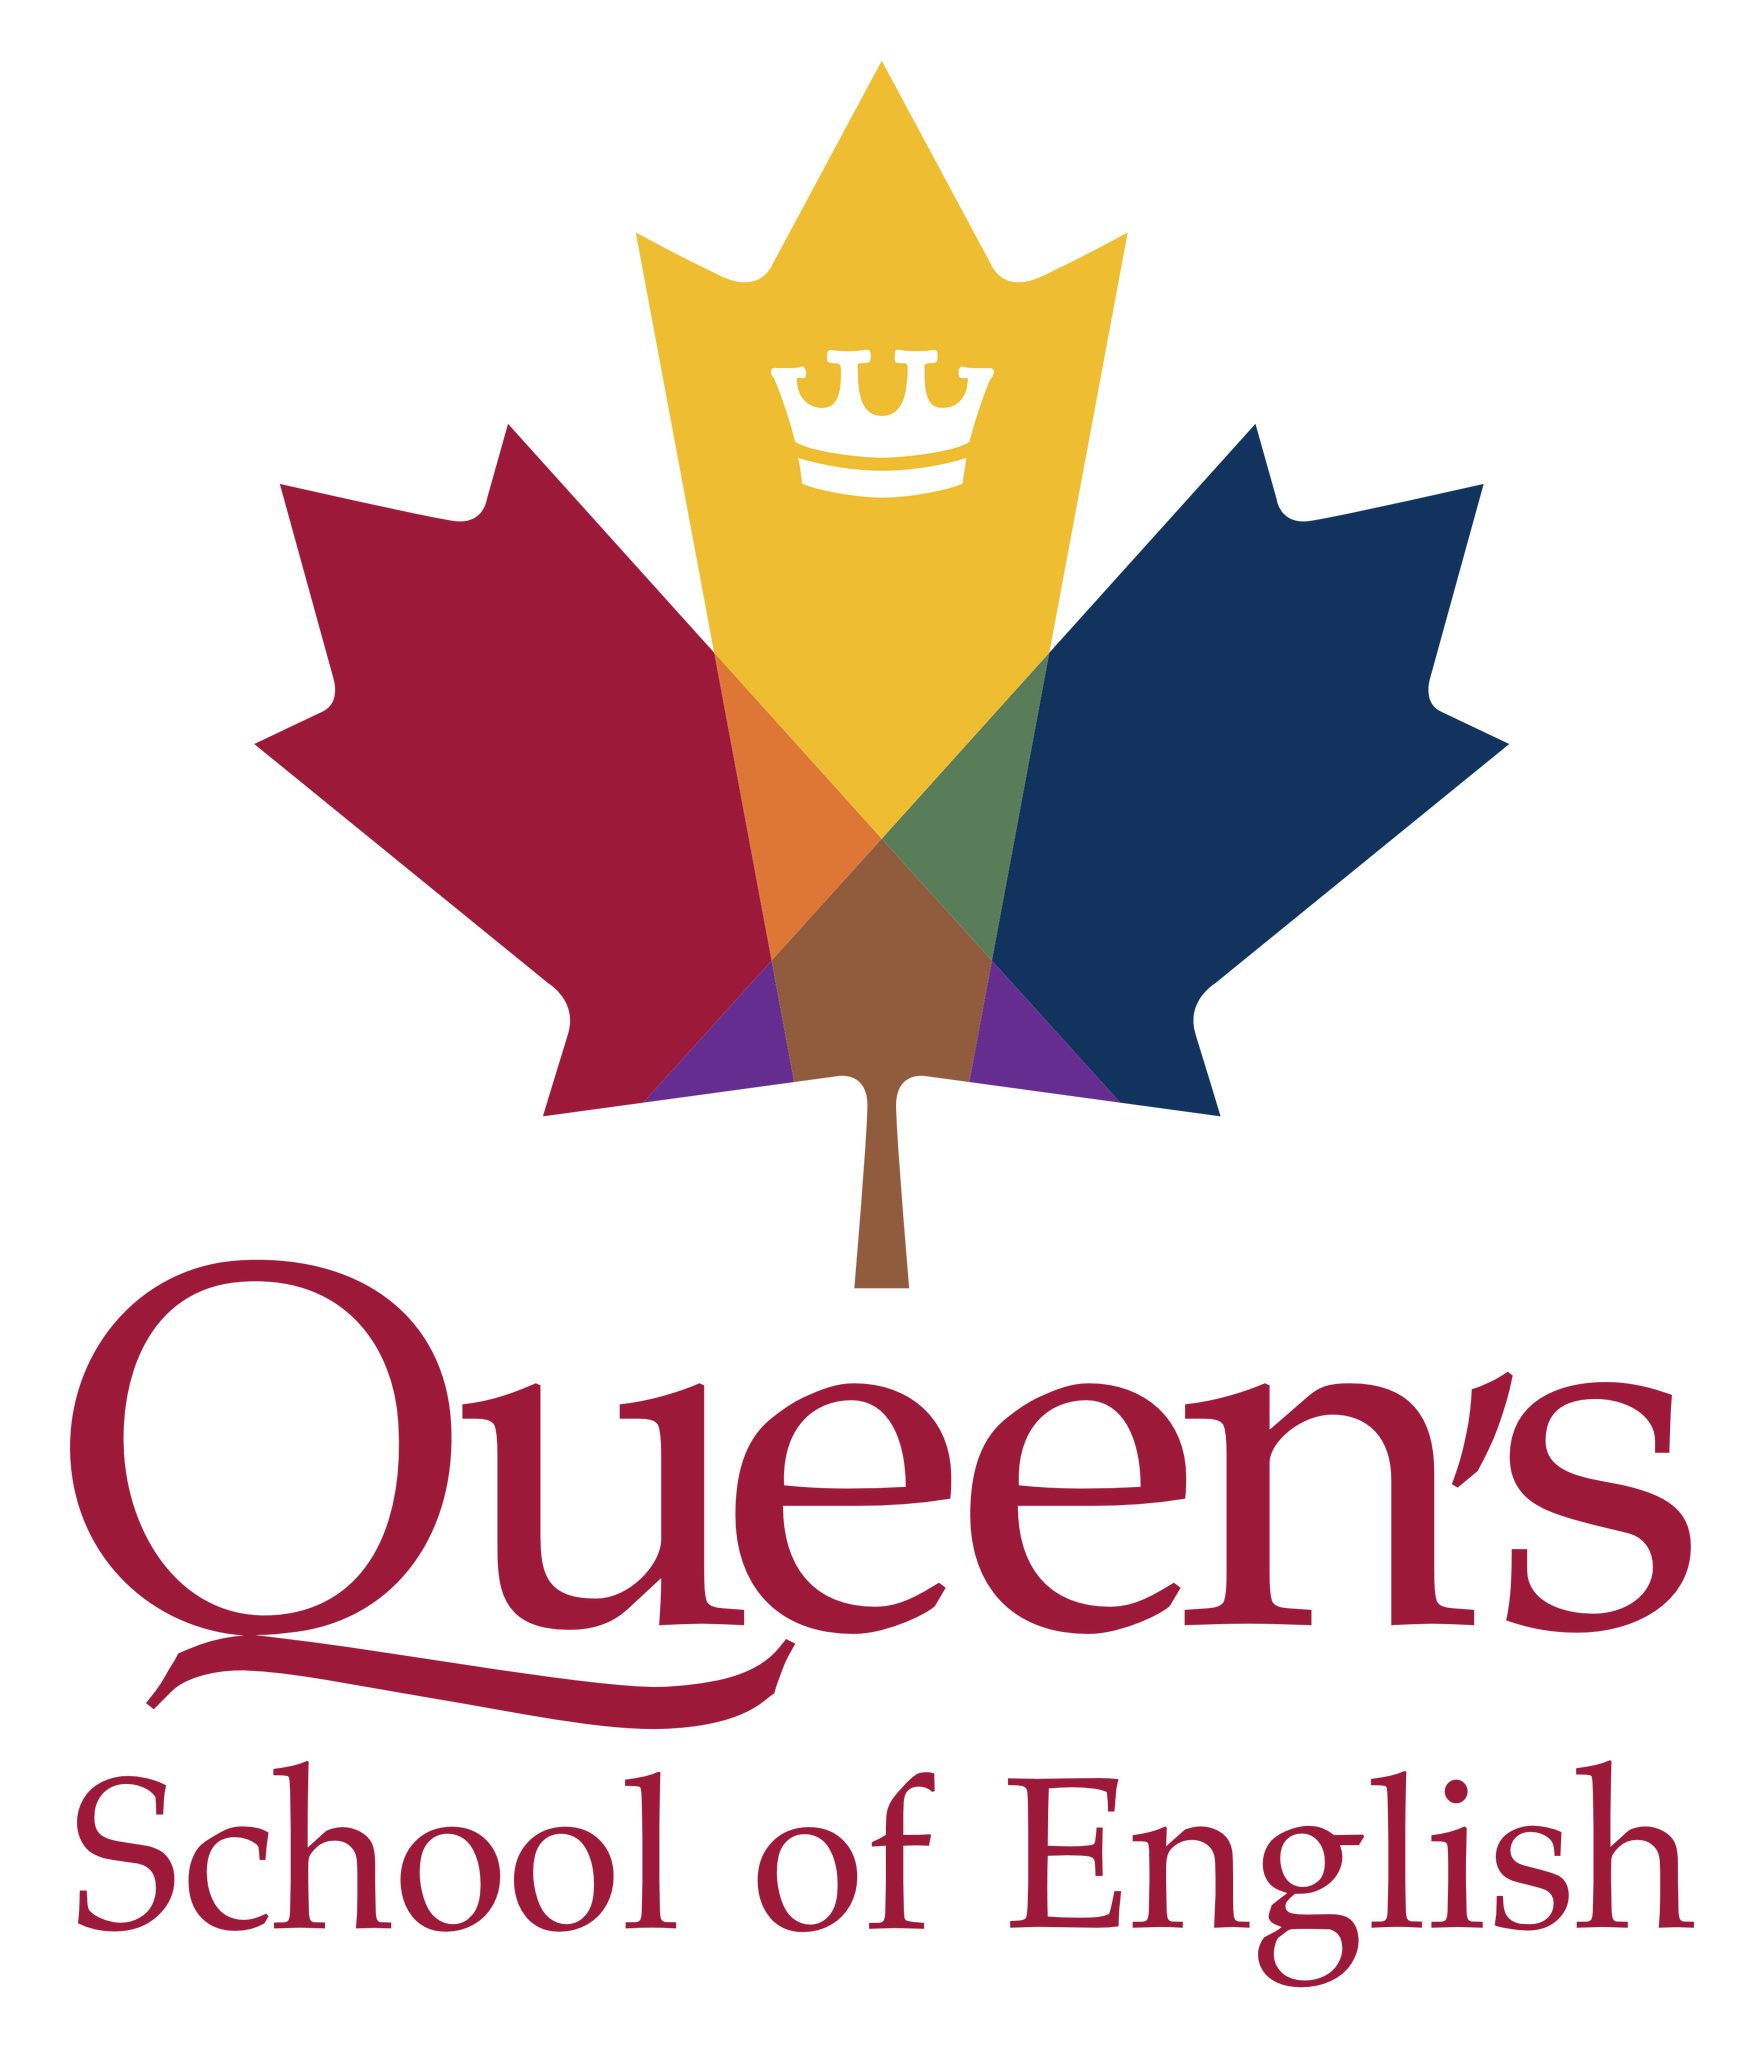 Queen's School of English logo in colour